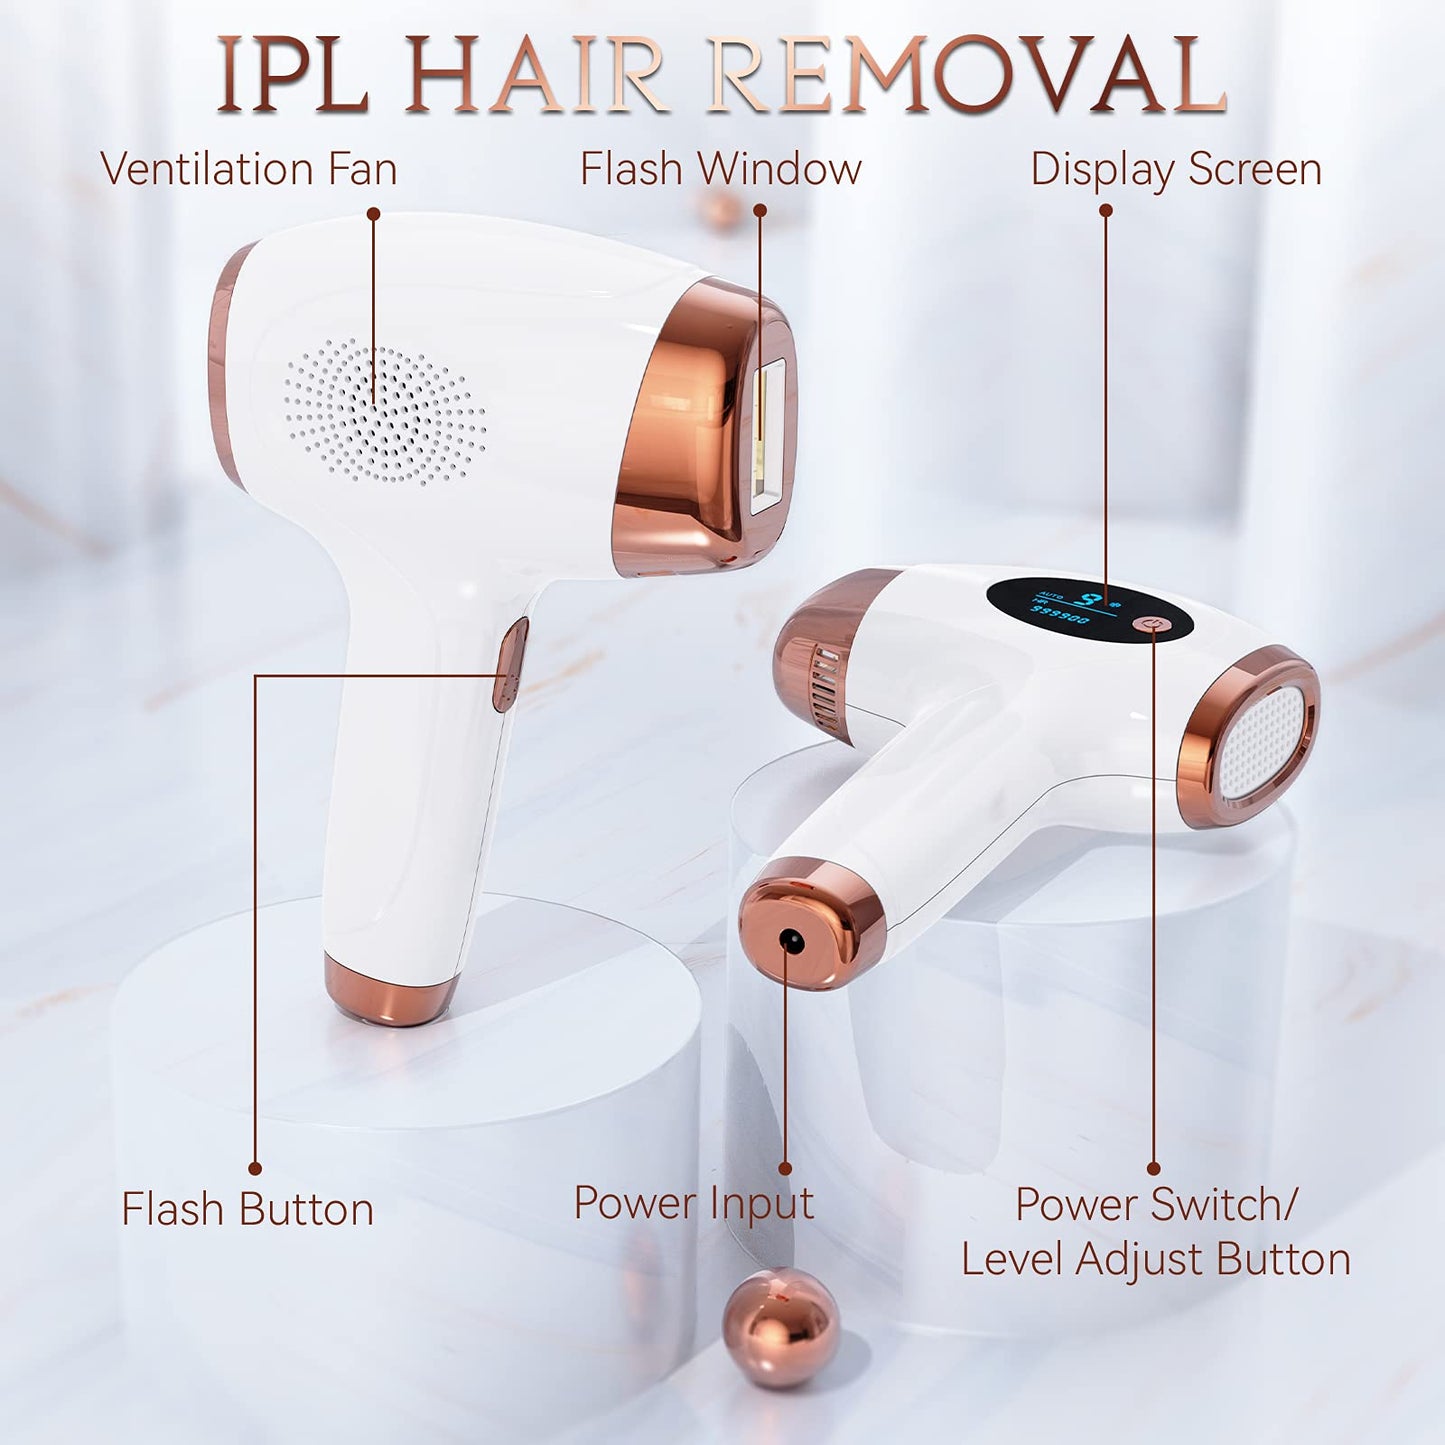 Aopvui At-Home IPL Hair Removal